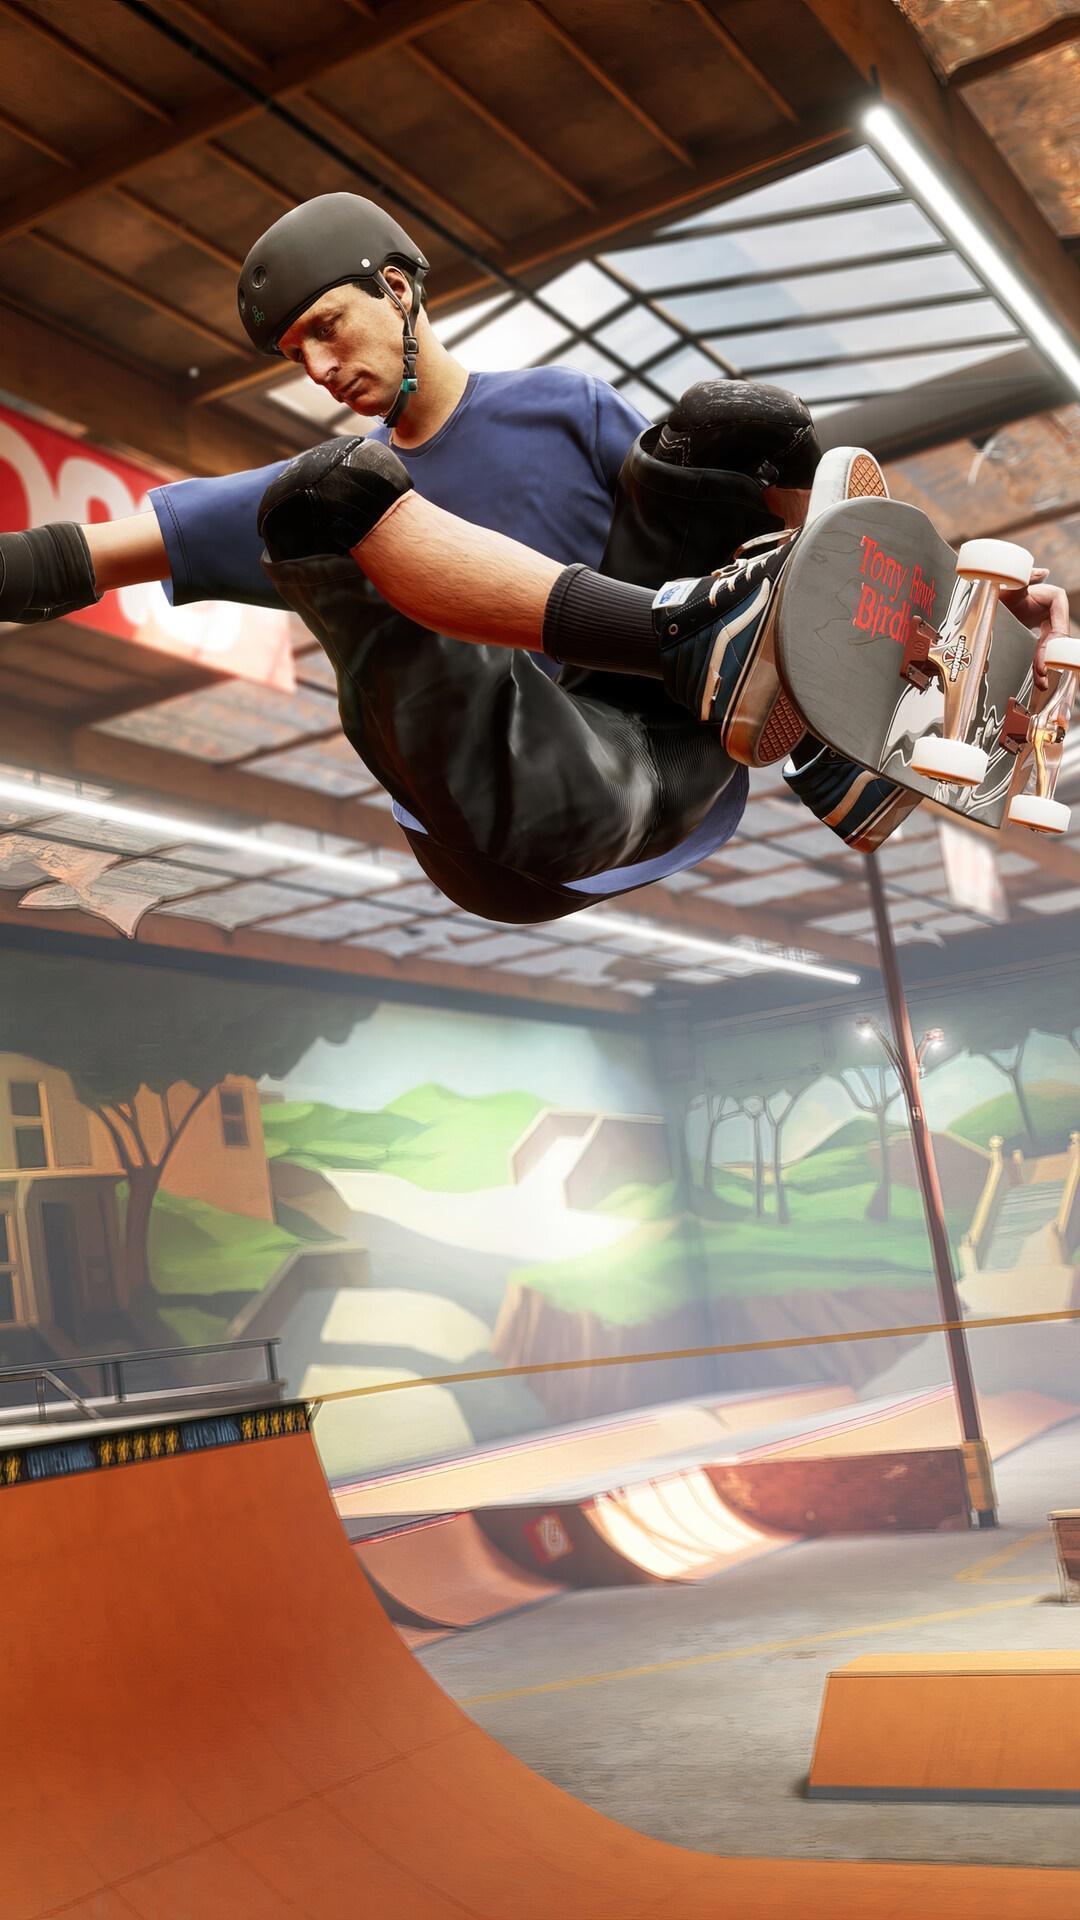 HD wallpaper, Skateboarding, Video Game